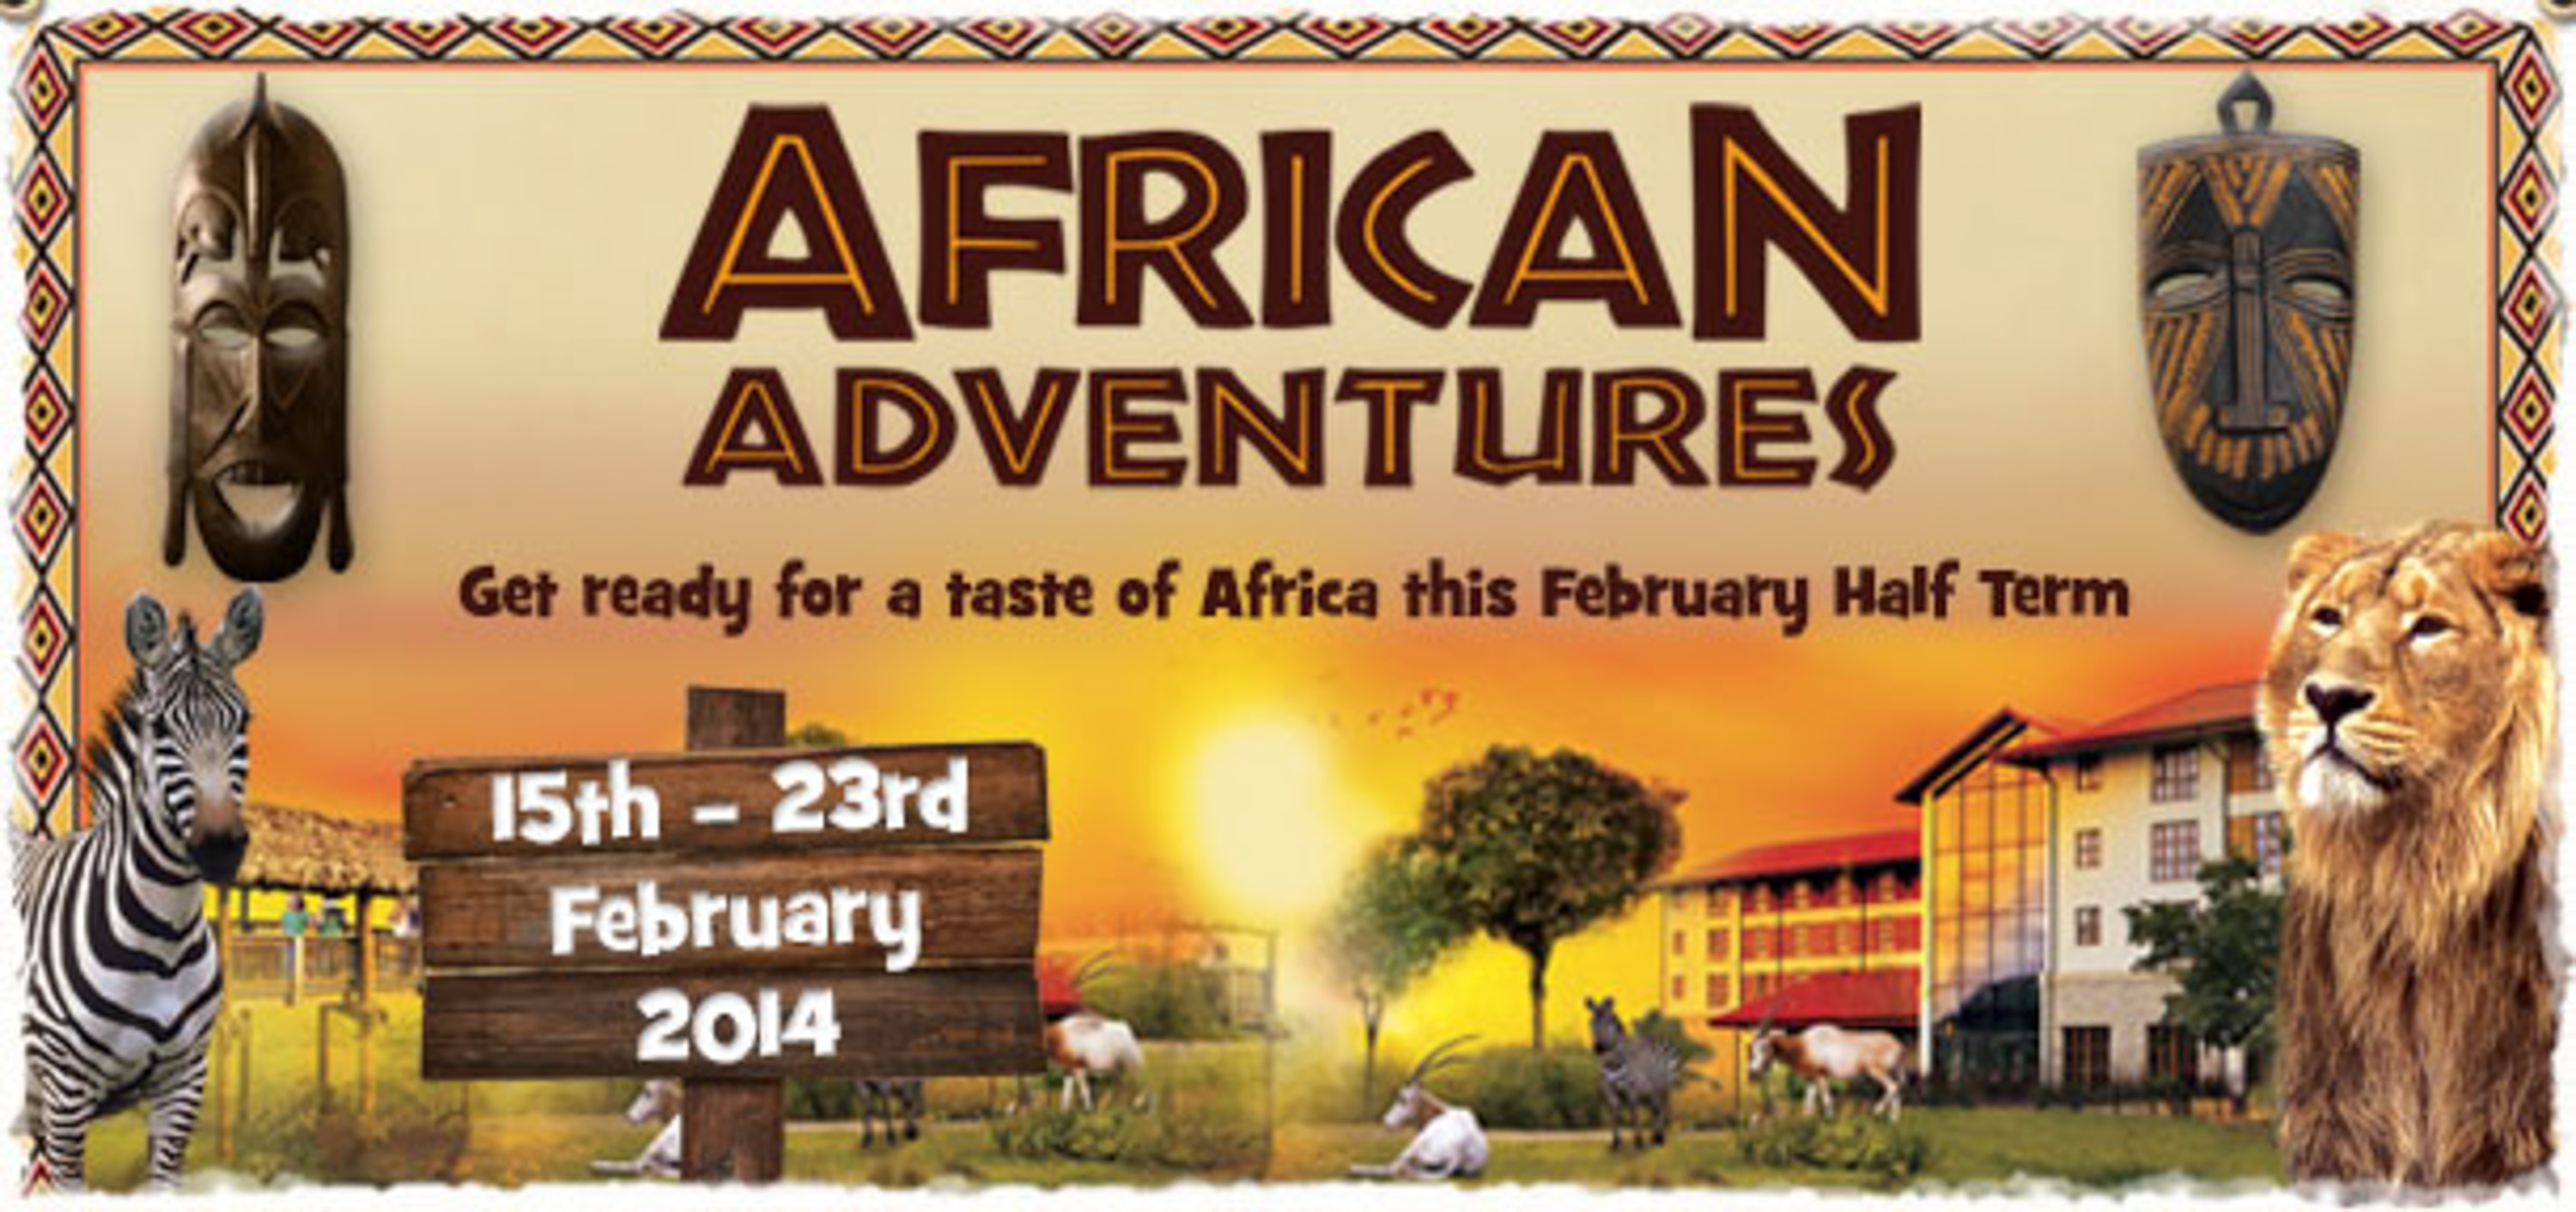 African Adventures returns to Chessington